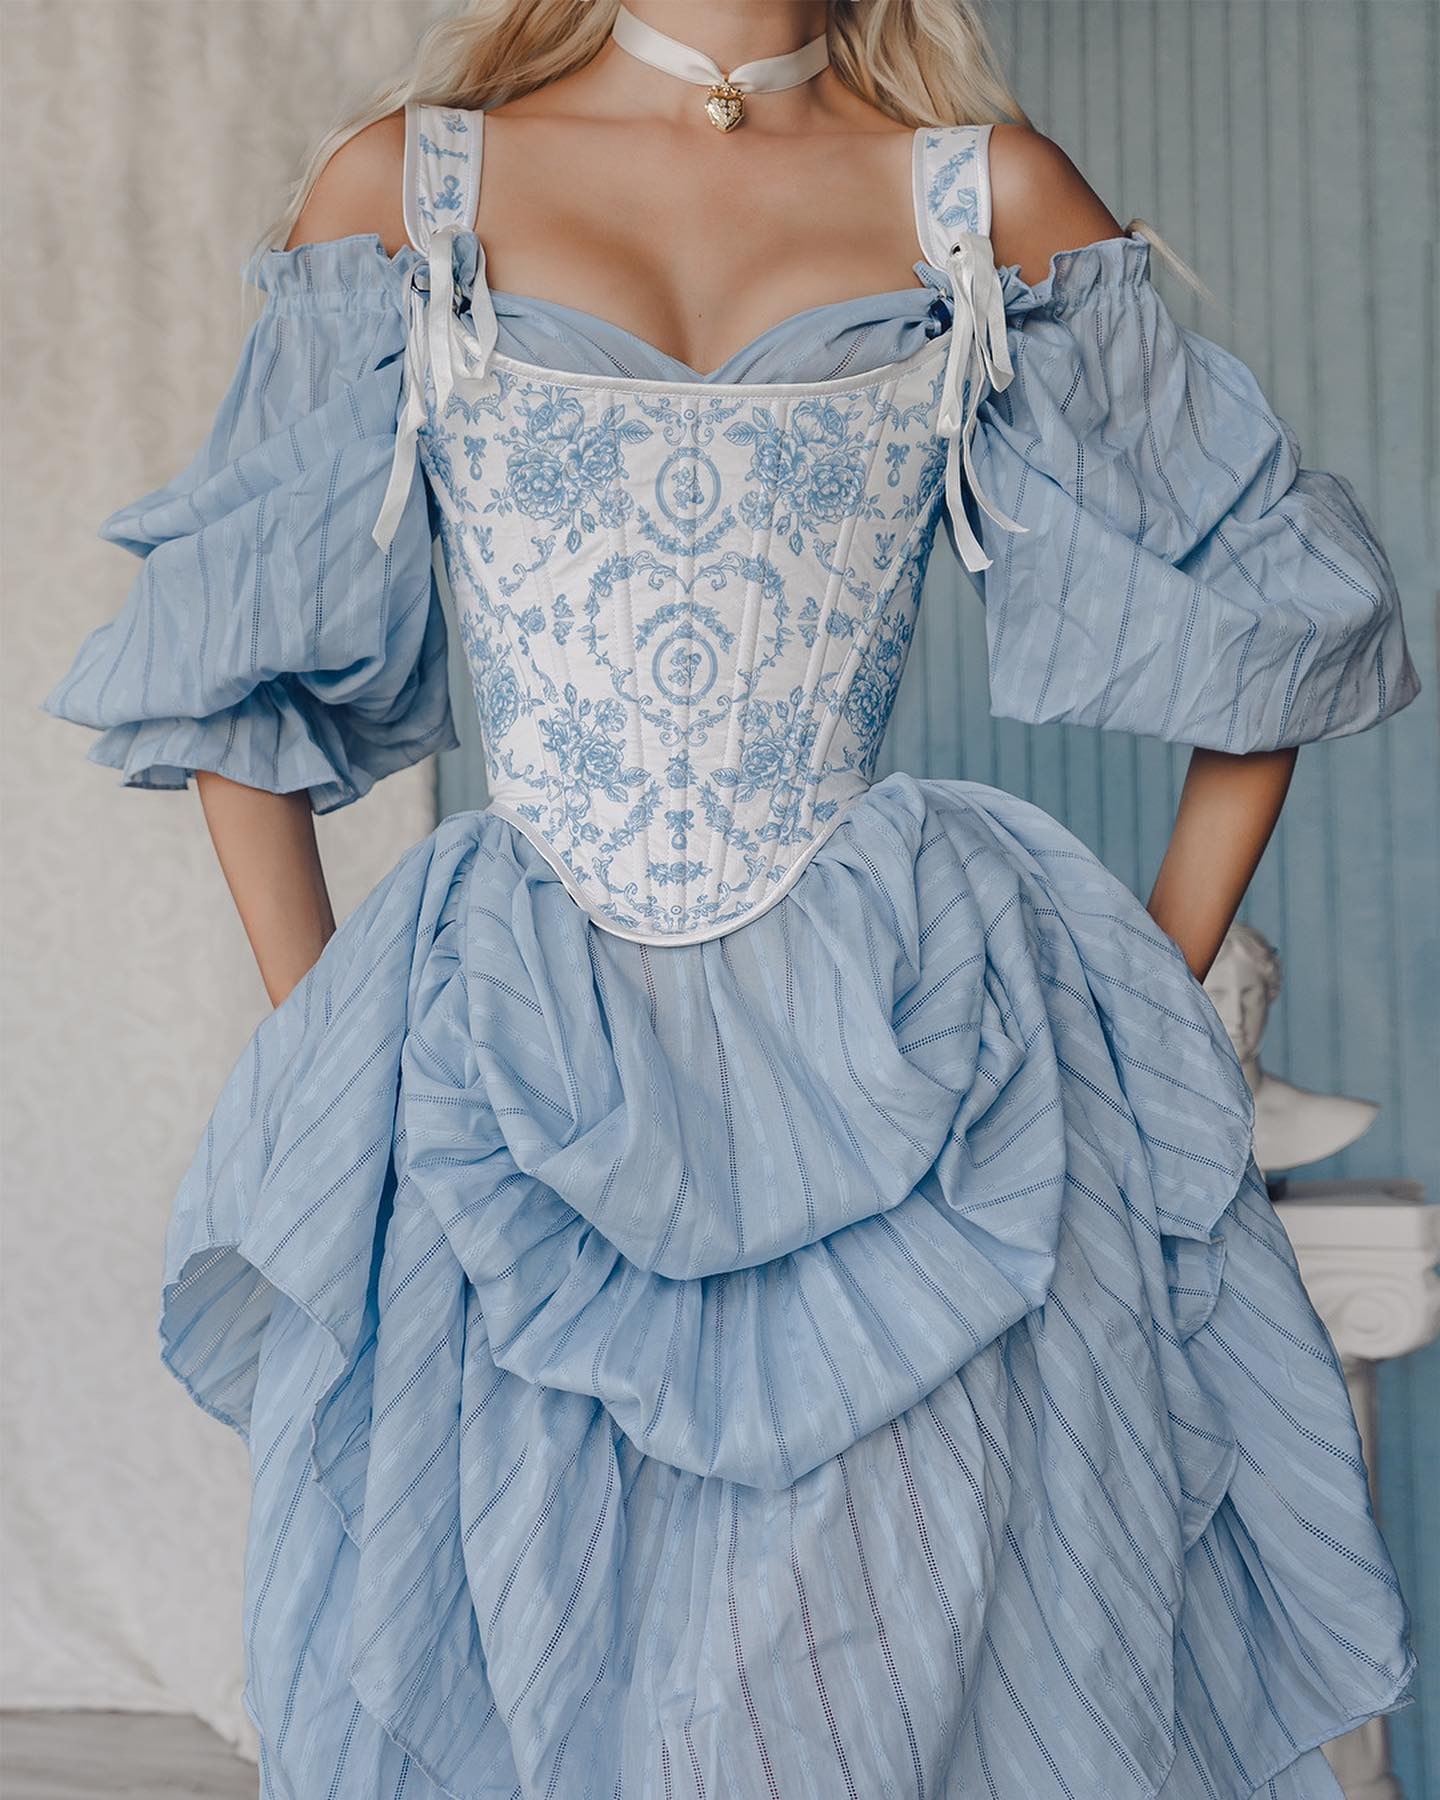 corset traditionnel 11zon